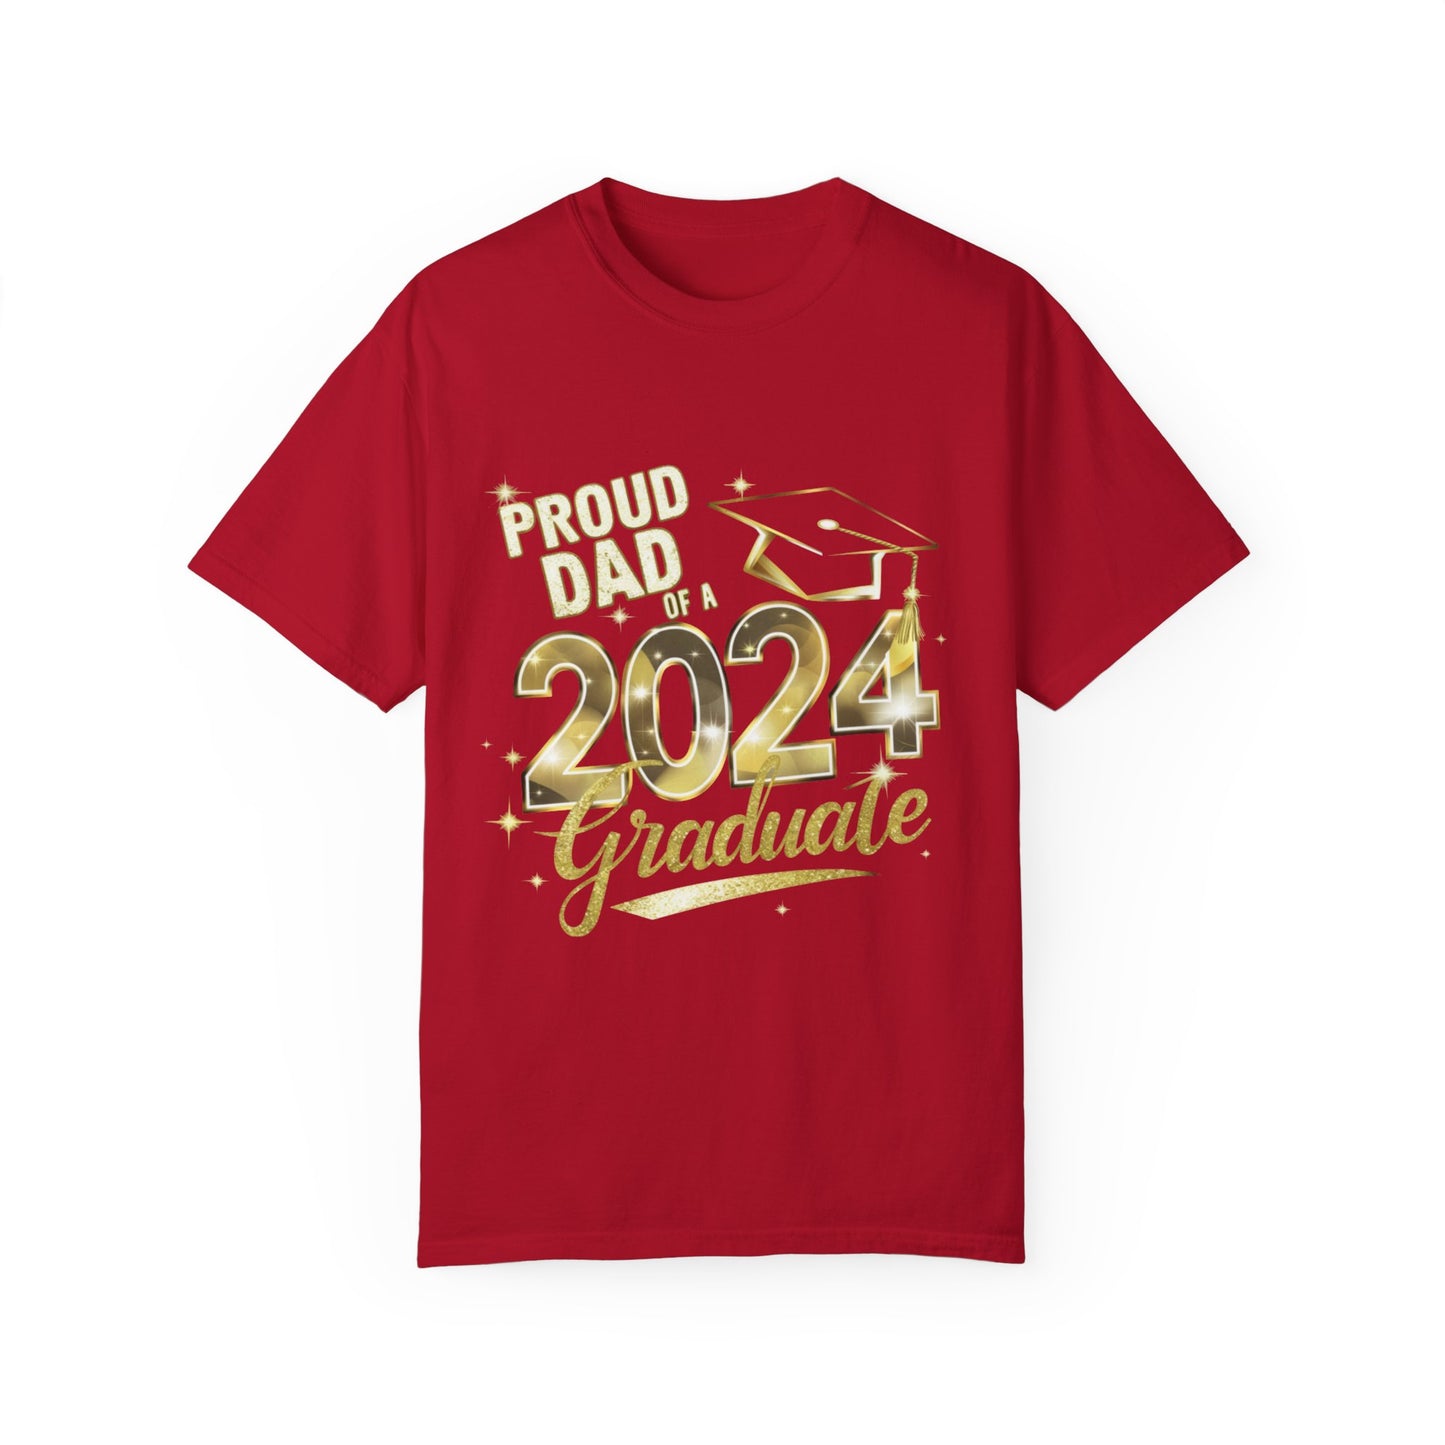 Proud of Dad 2024 Graduate Unisex Garment-dyed T-shirt Cotton Funny Humorous Graphic Soft Premium Unisex Men Women Red T-shirt Birthday Gift-2